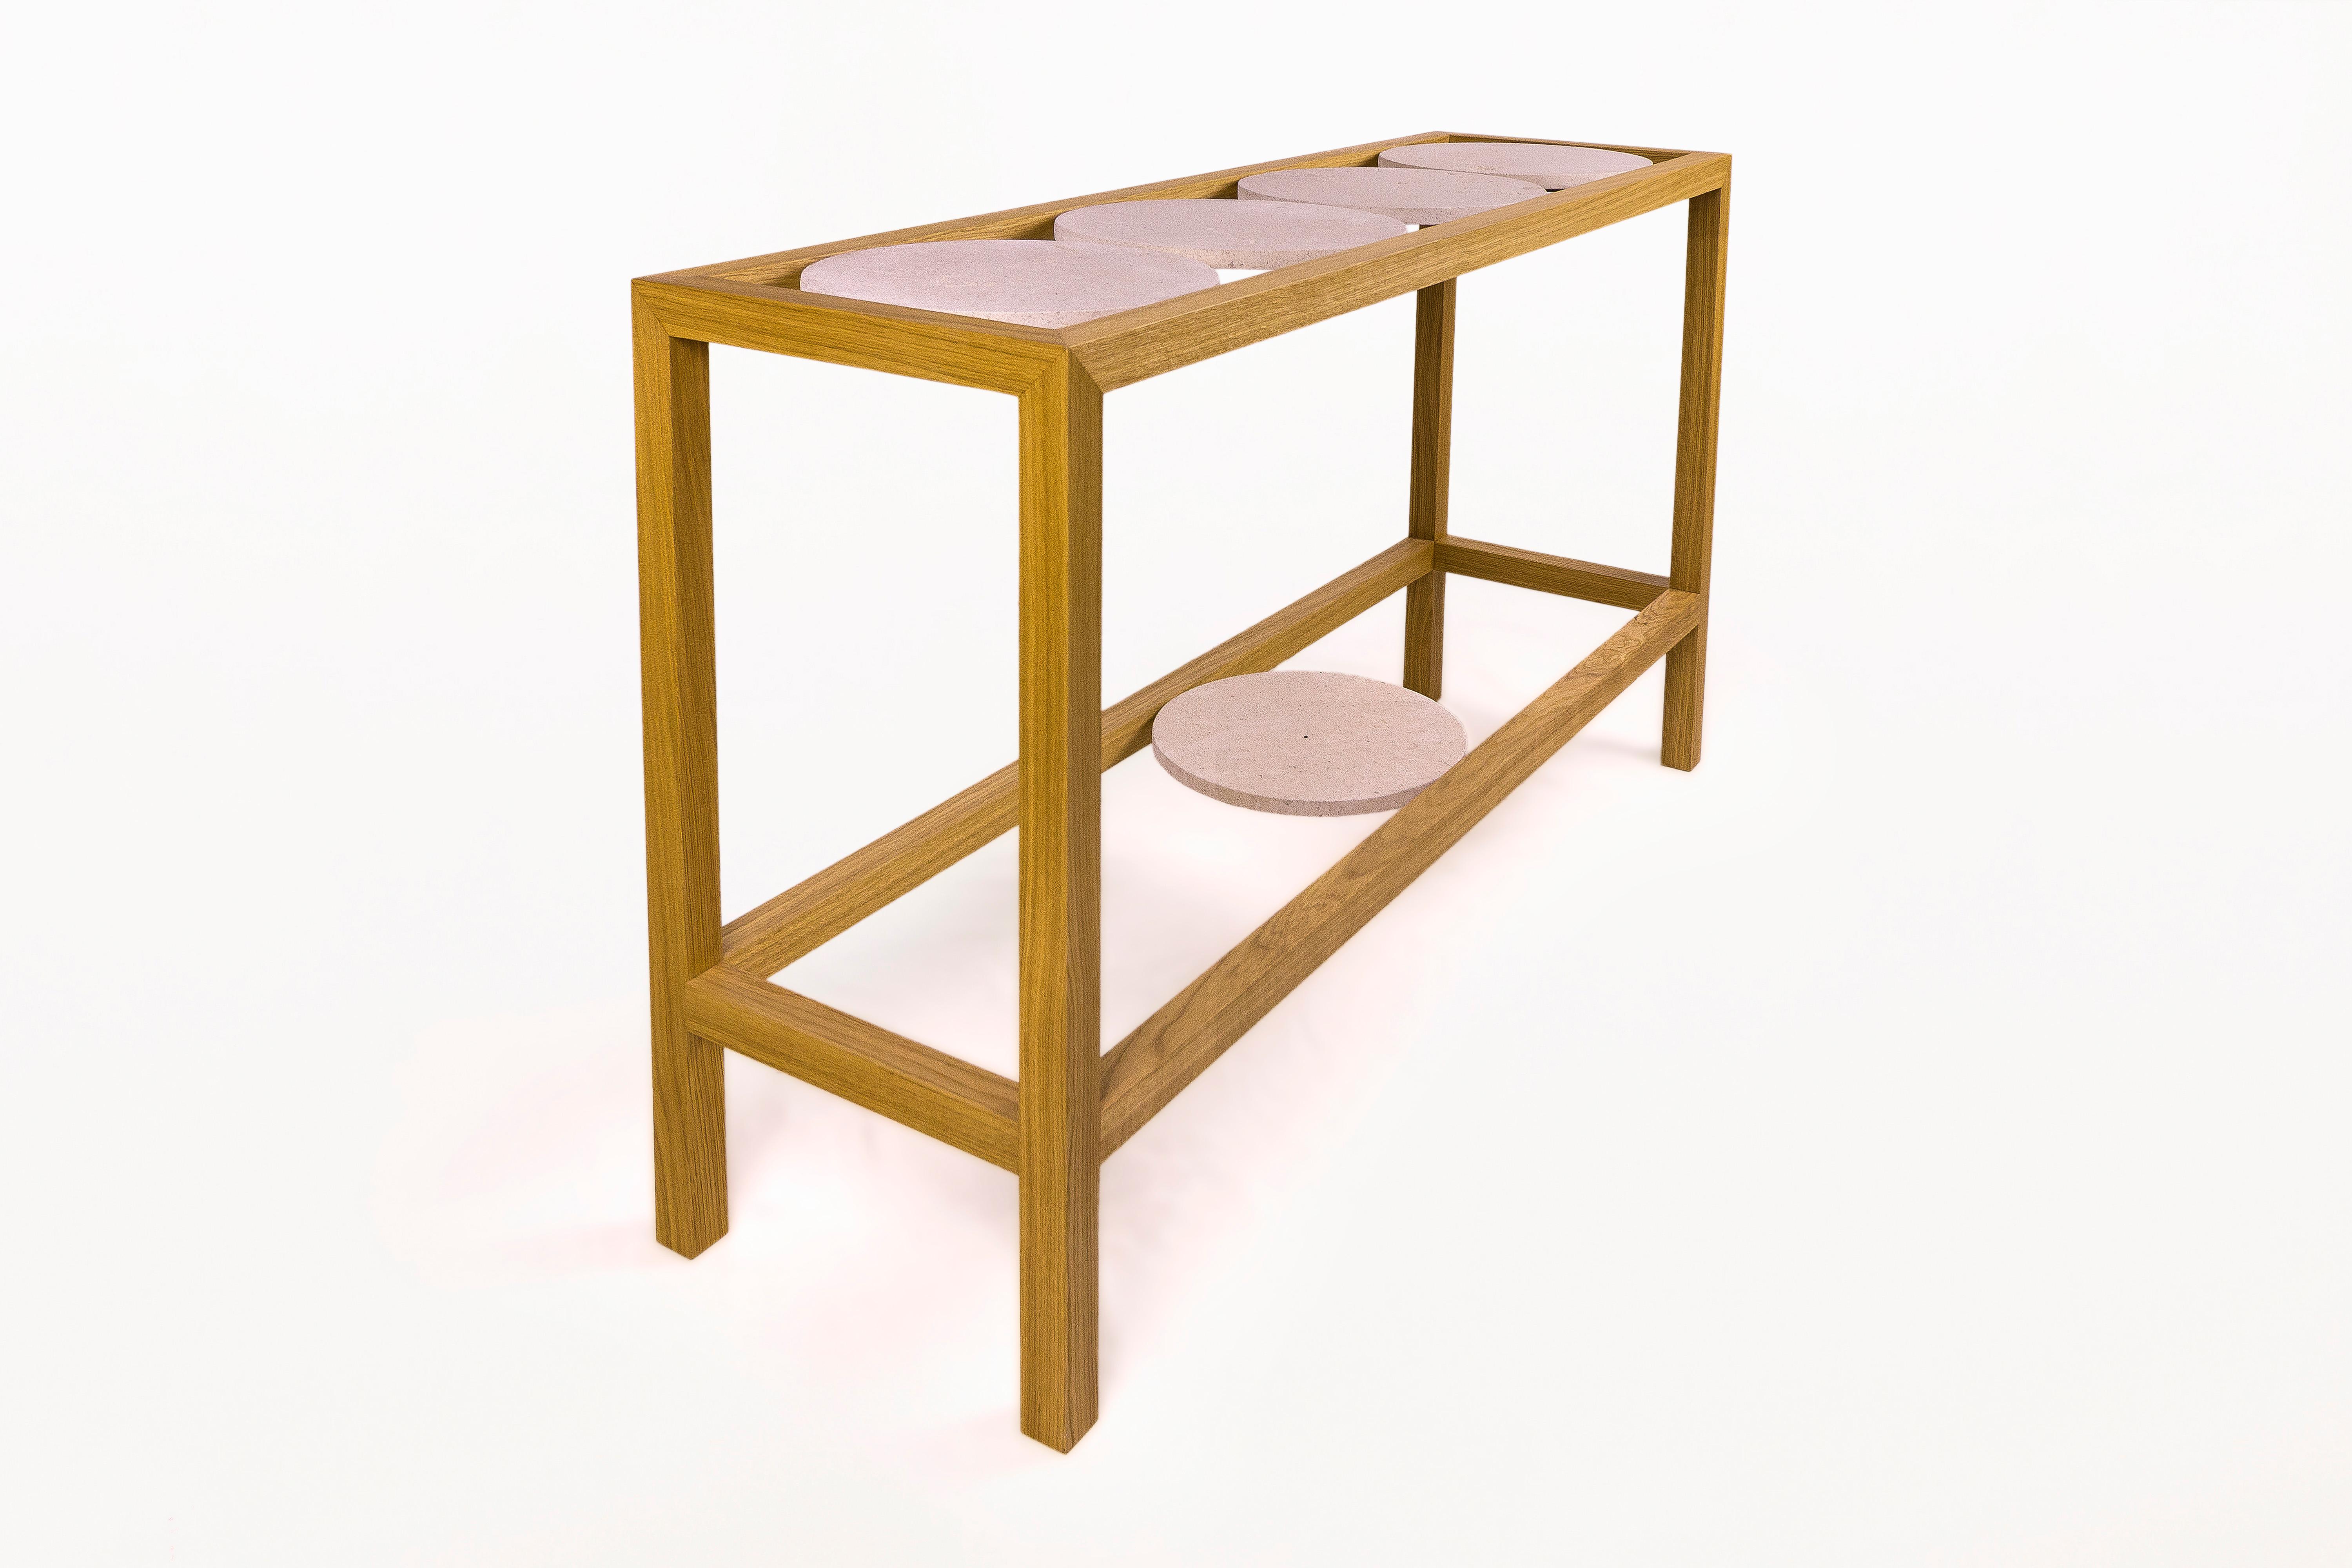 Travertine and oak console table
Light and solid
Contemporain design
circa 2020, France.